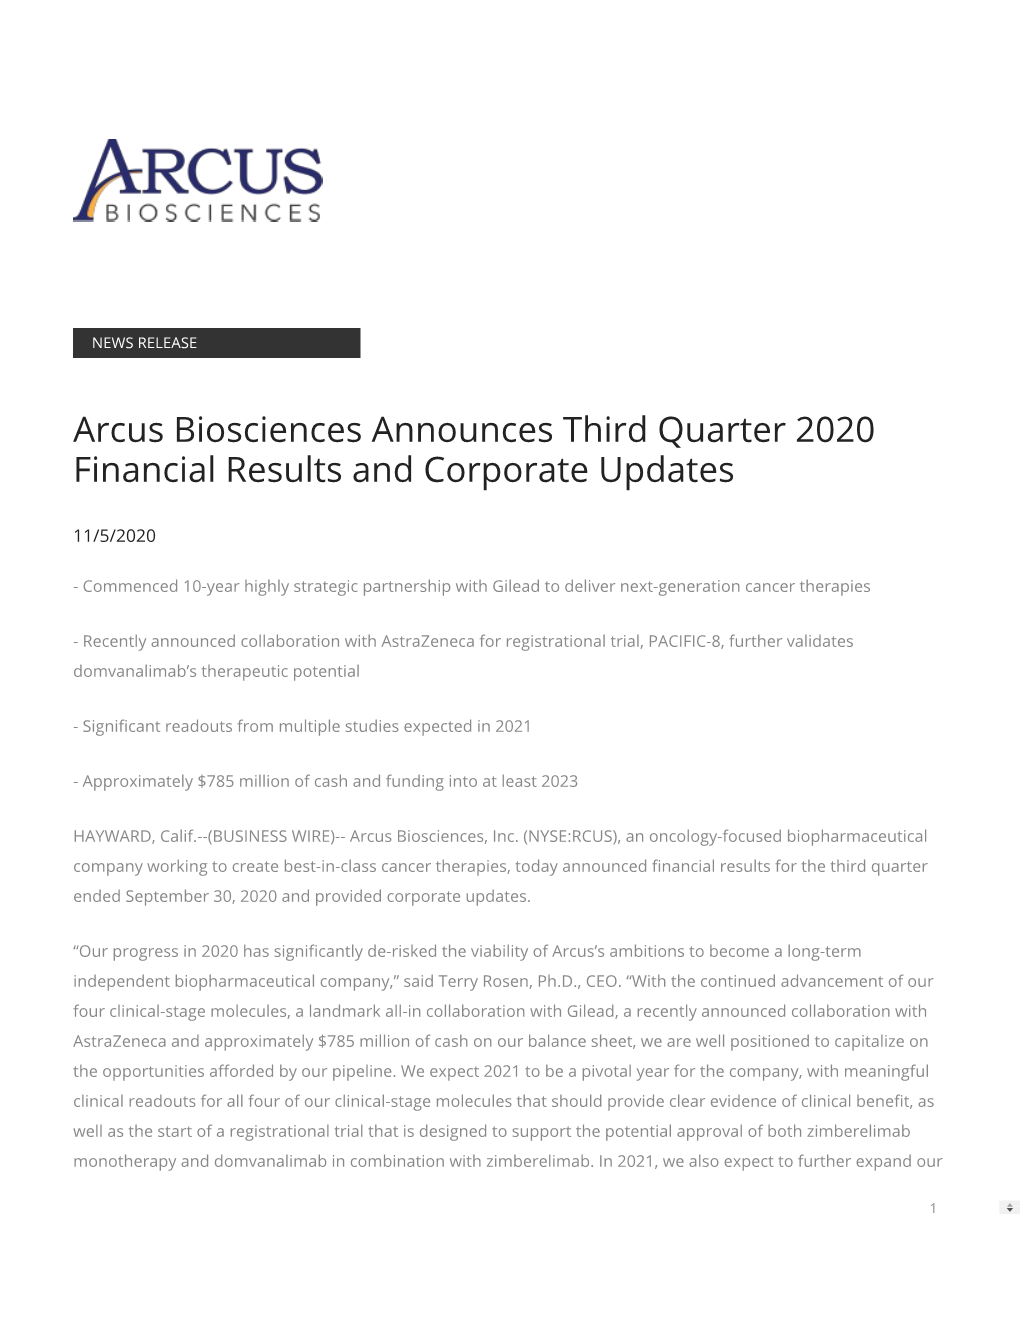 Arcus Biosciences Announces Third Quarter 2020 Financial Results and Corporate Updates